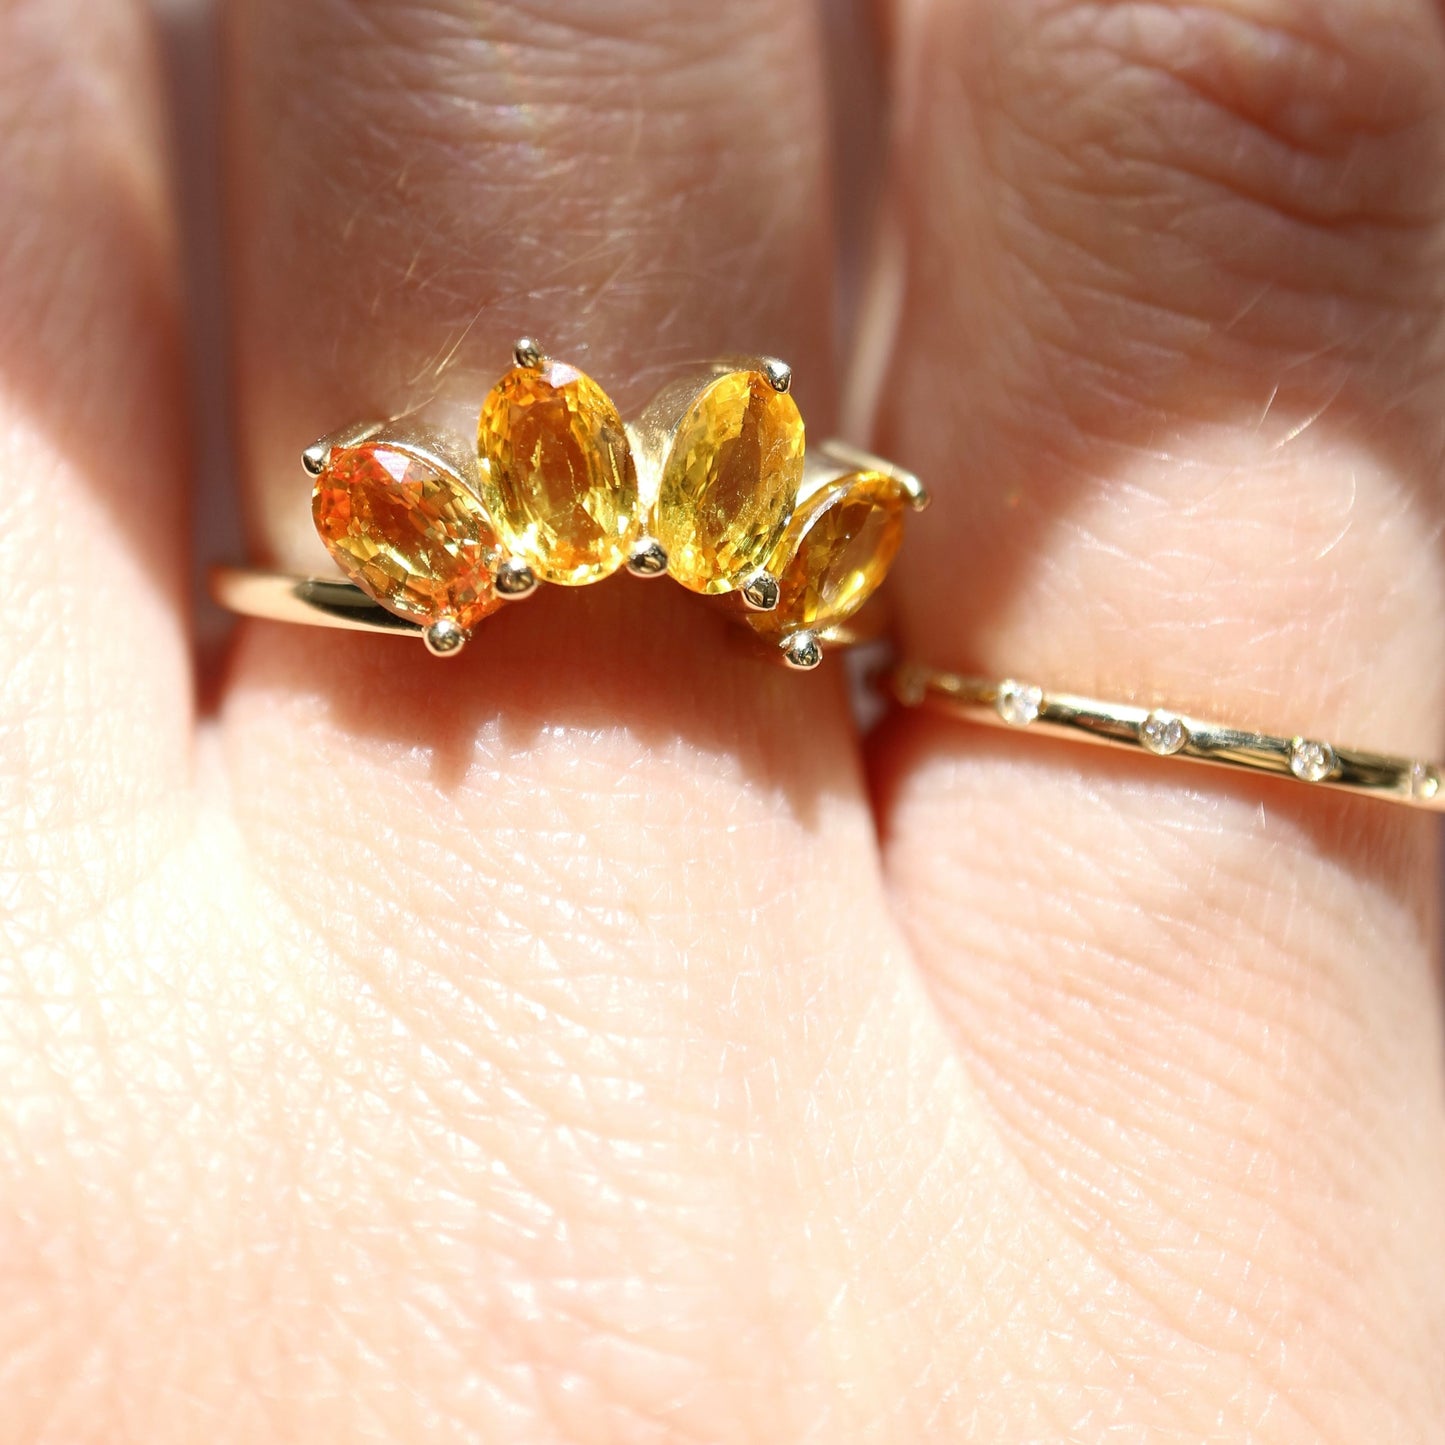 9kt gold Sunrise Ring with citrine gemstones